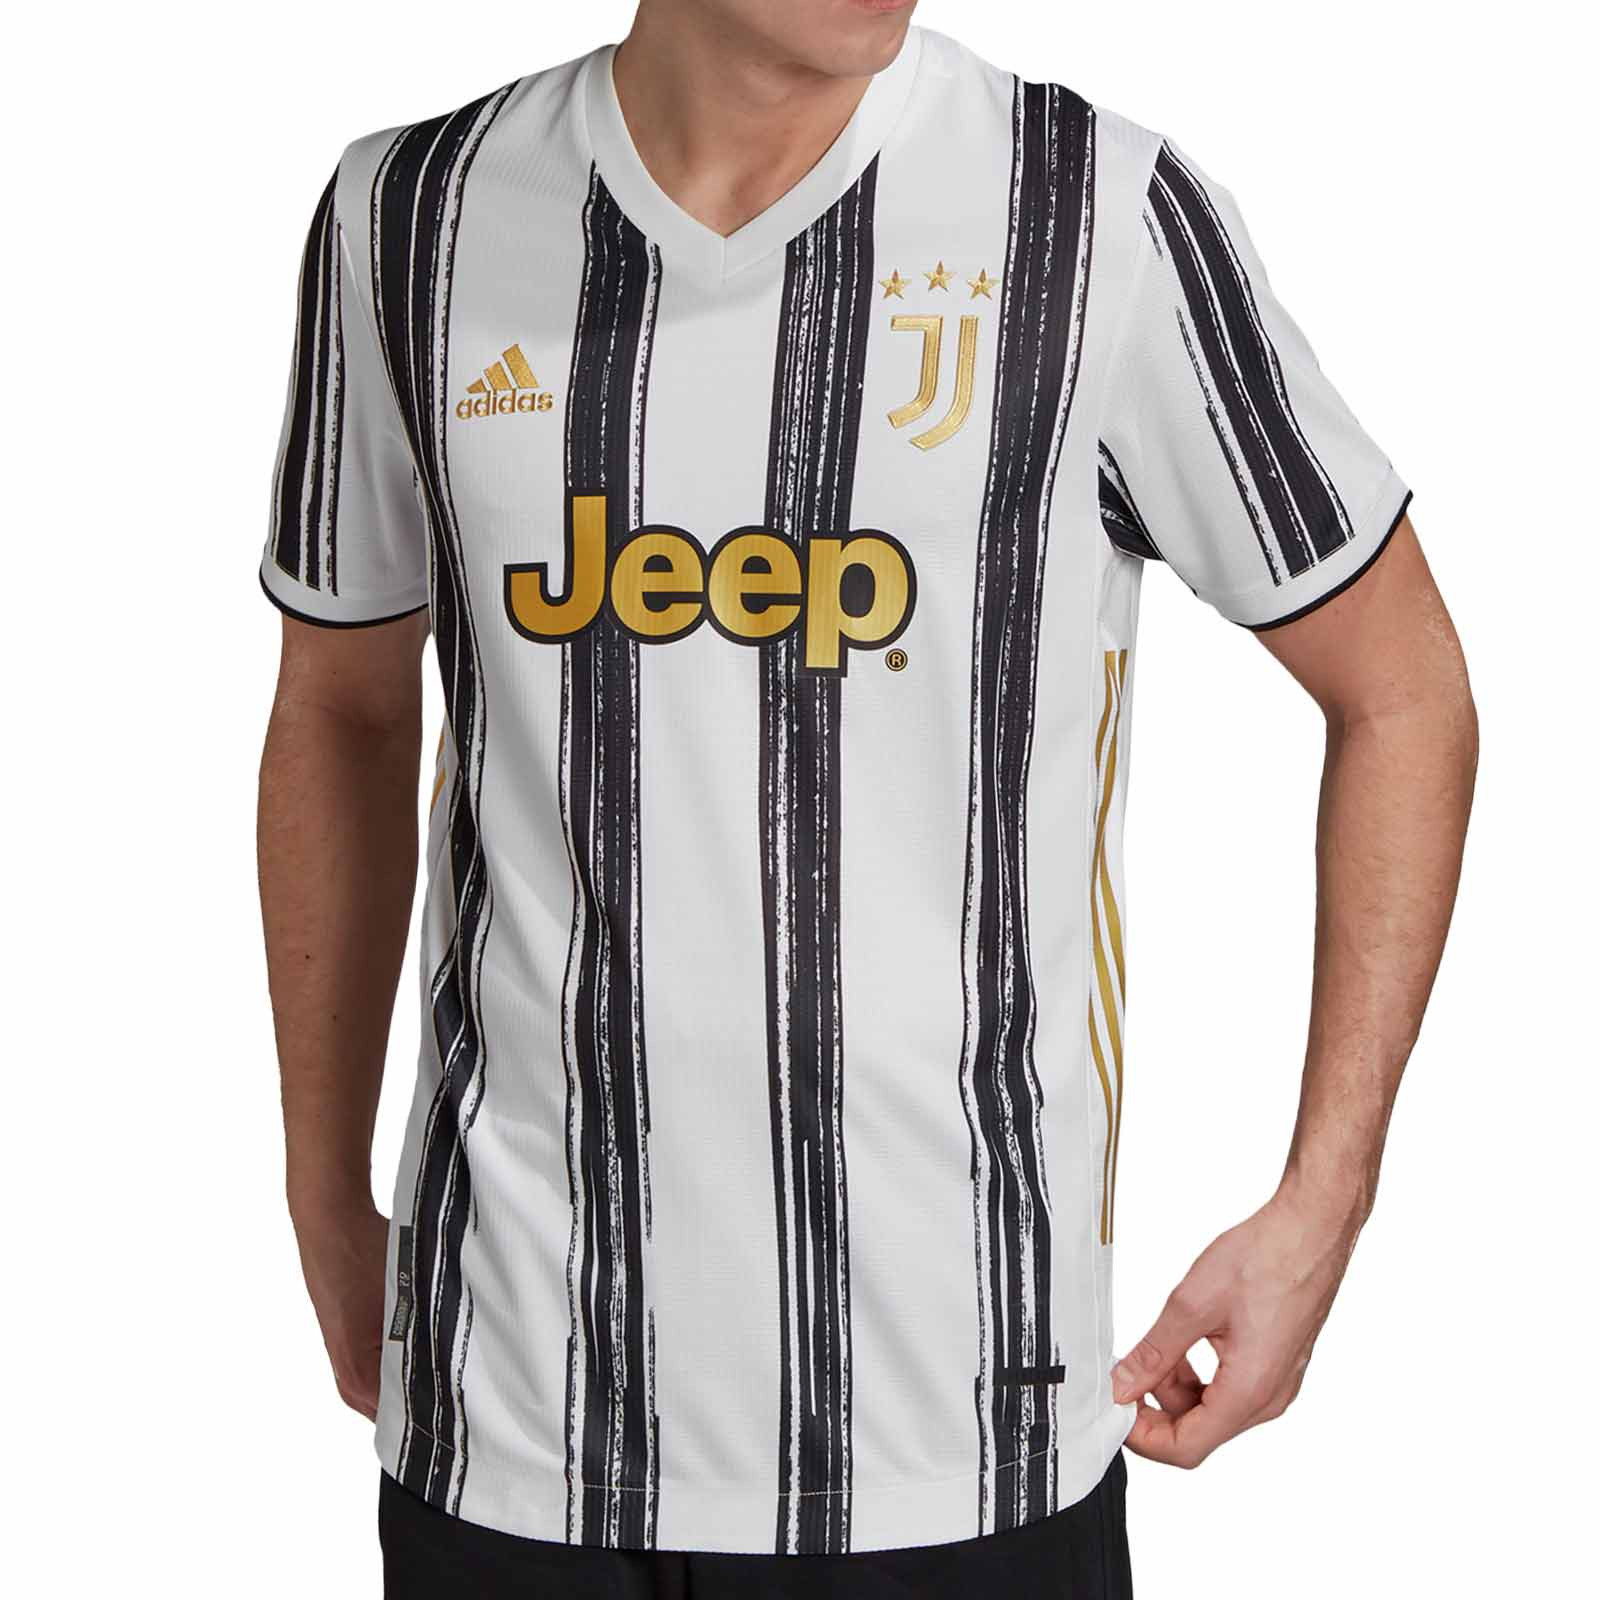 Camiseta adidas Juventus 2020 2021 futbolmania